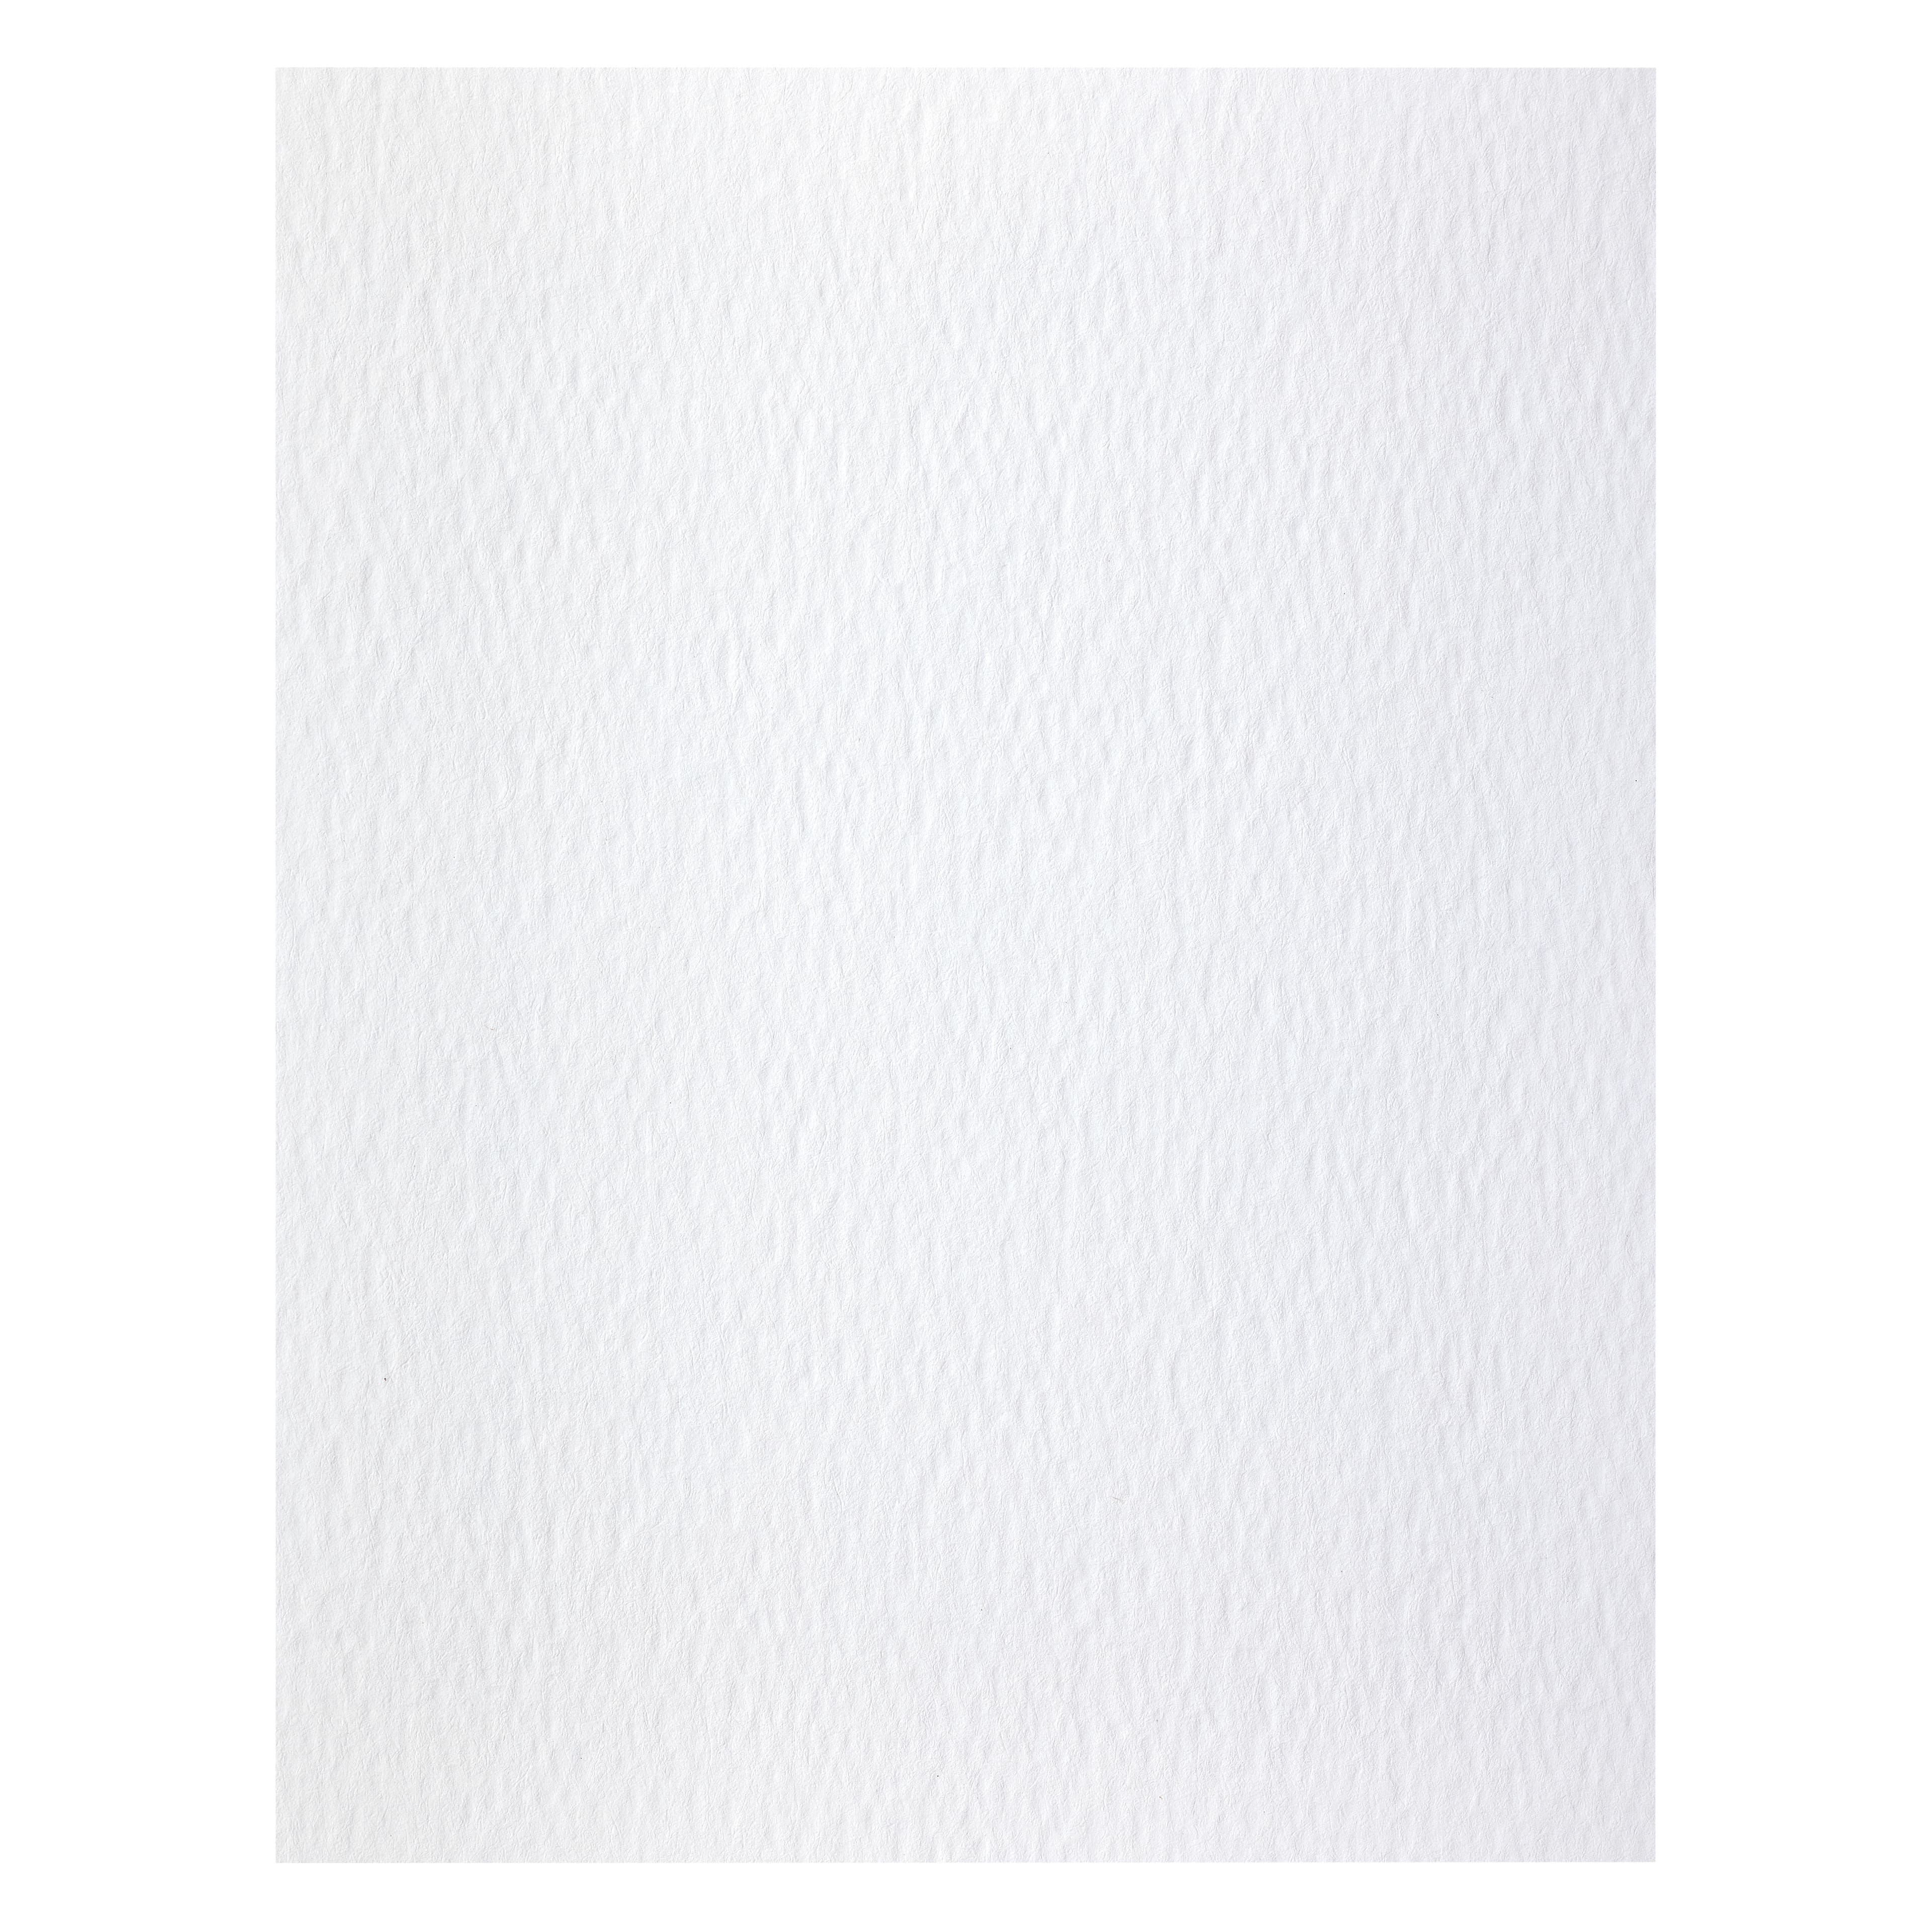 Tim Holtz Distress® Watercolor Cardstock 8.5 x 11, 200pk